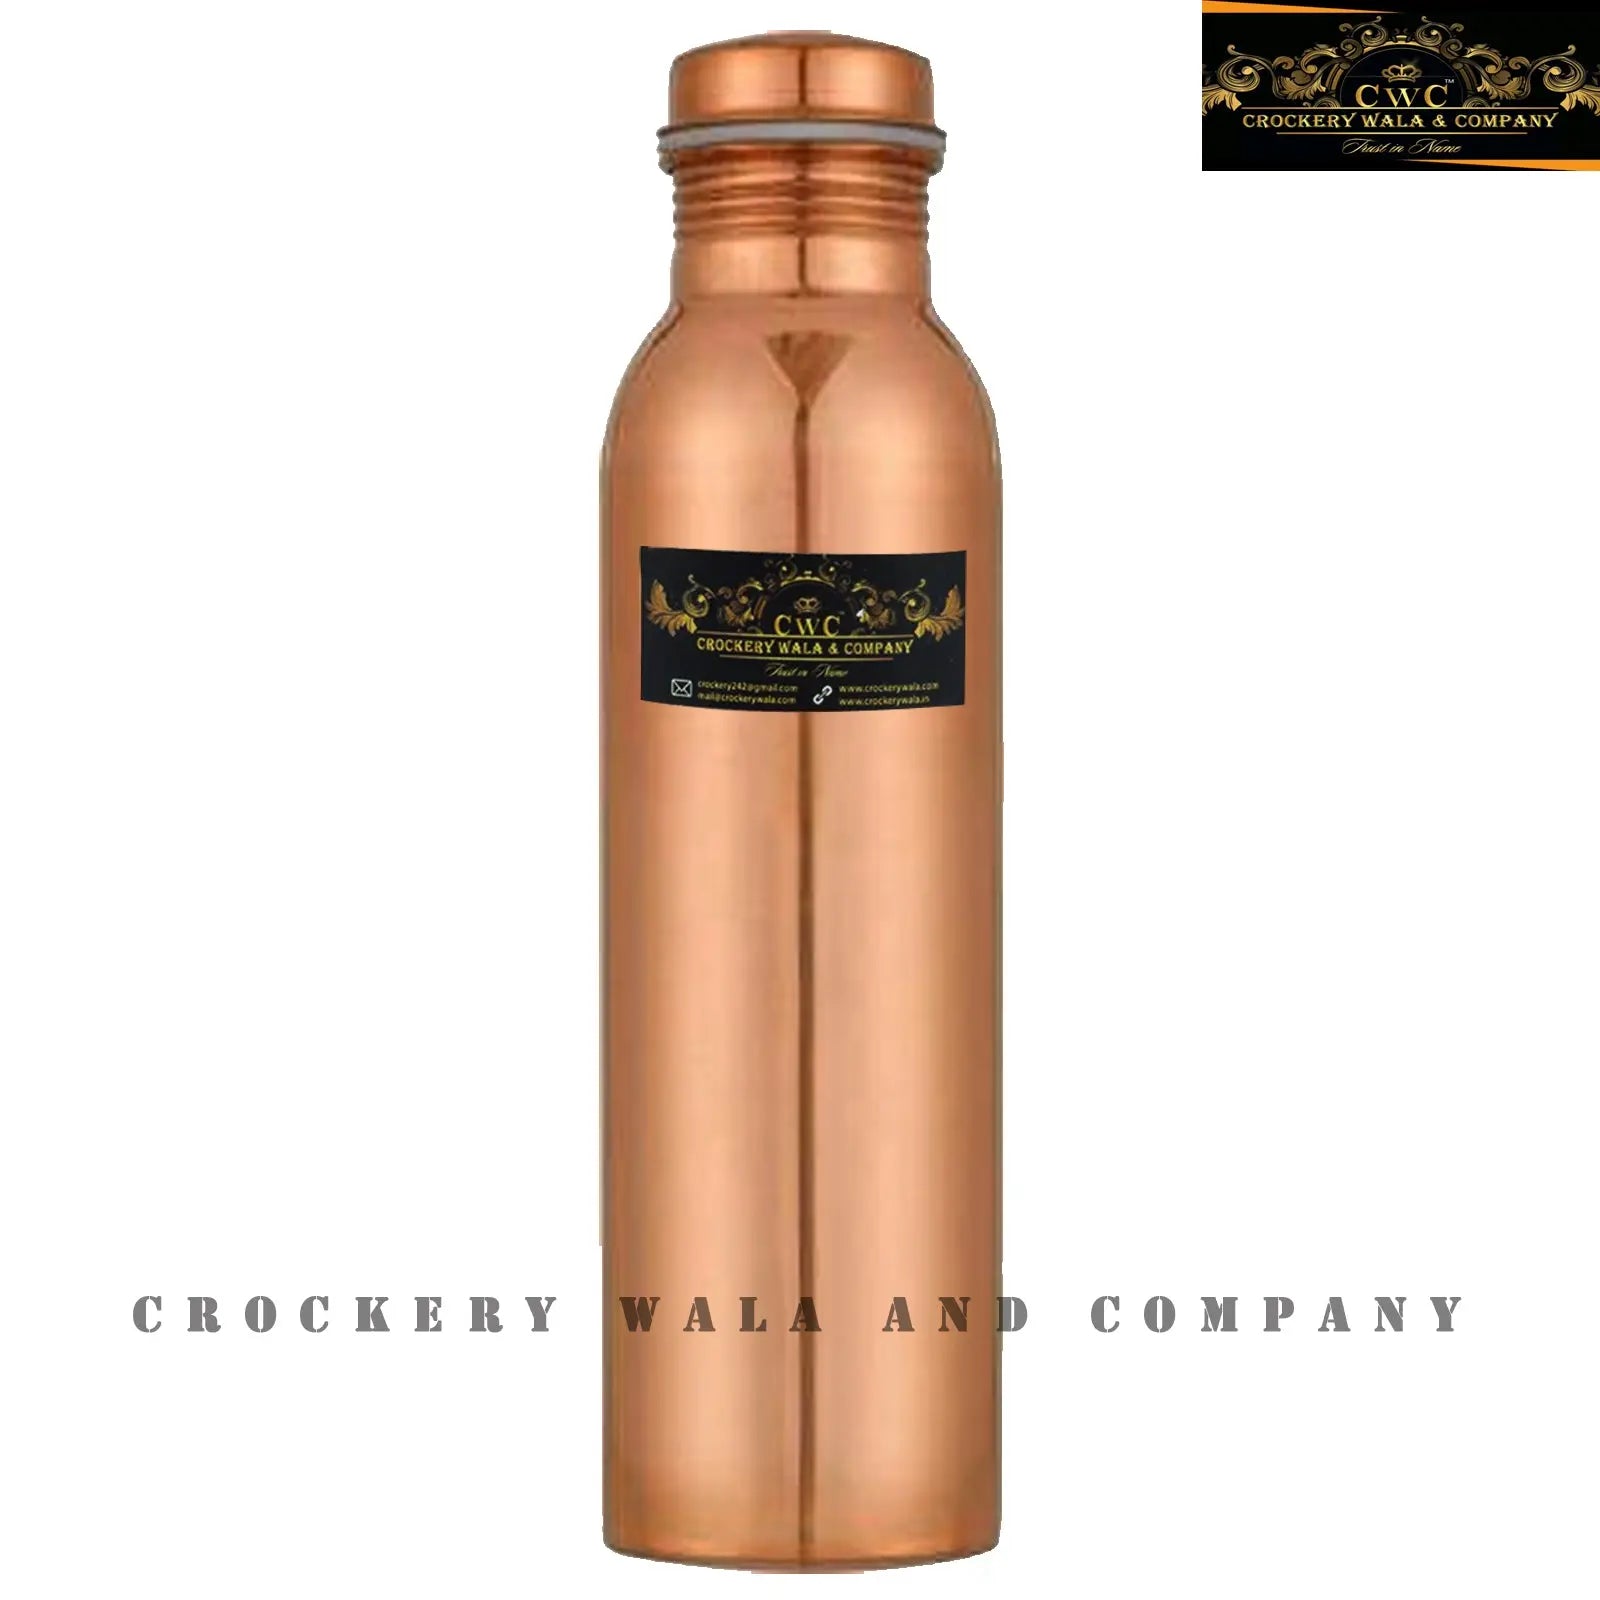 Crockery Wala And Company Pure Copper Water Jug Glass Bottle Set Combo Pure Copper Drinkware || 1 Jug, 1 Bottle, 2 Glass - CROCKERY WALA AND COMPANY 